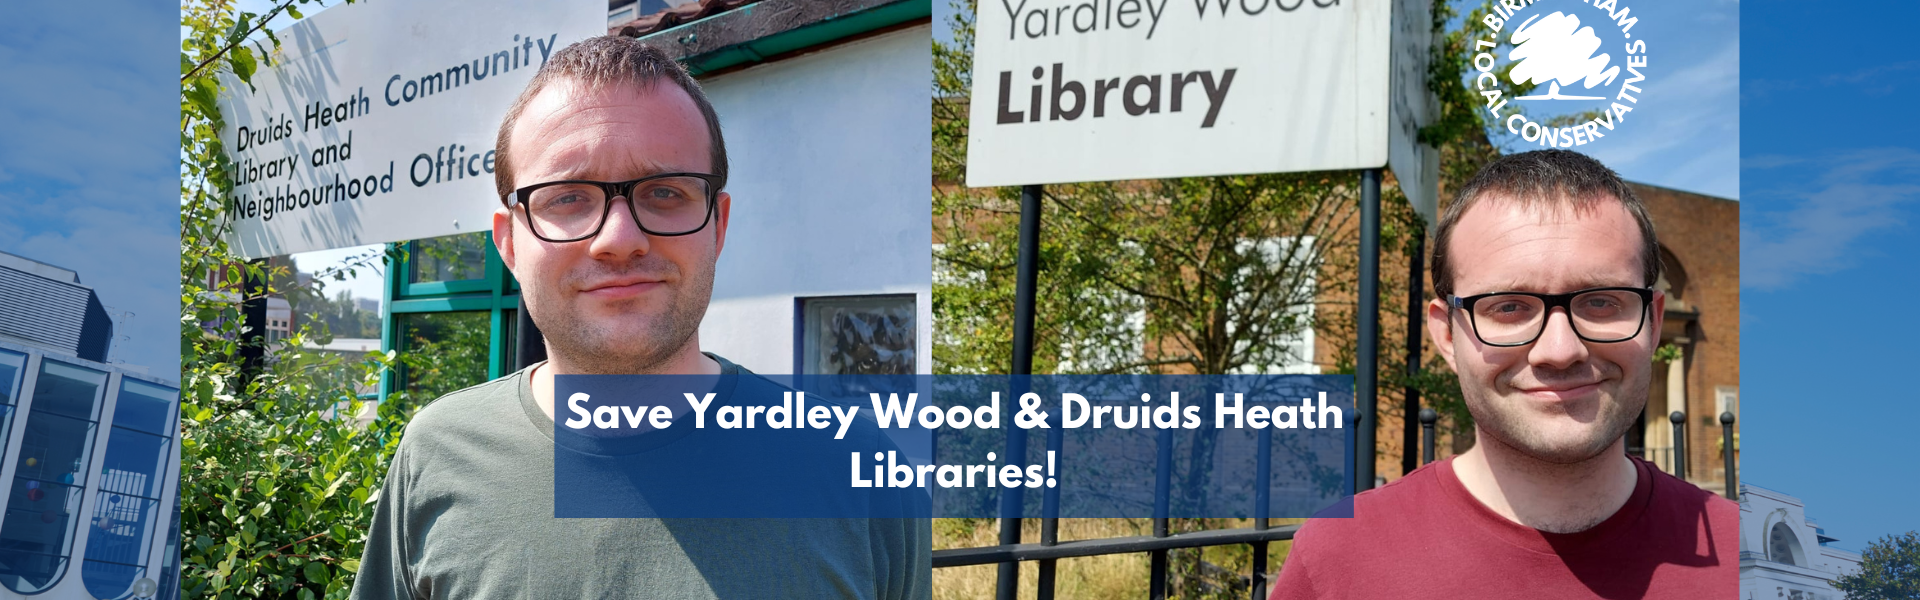 save yardley wood & druids heath libraries